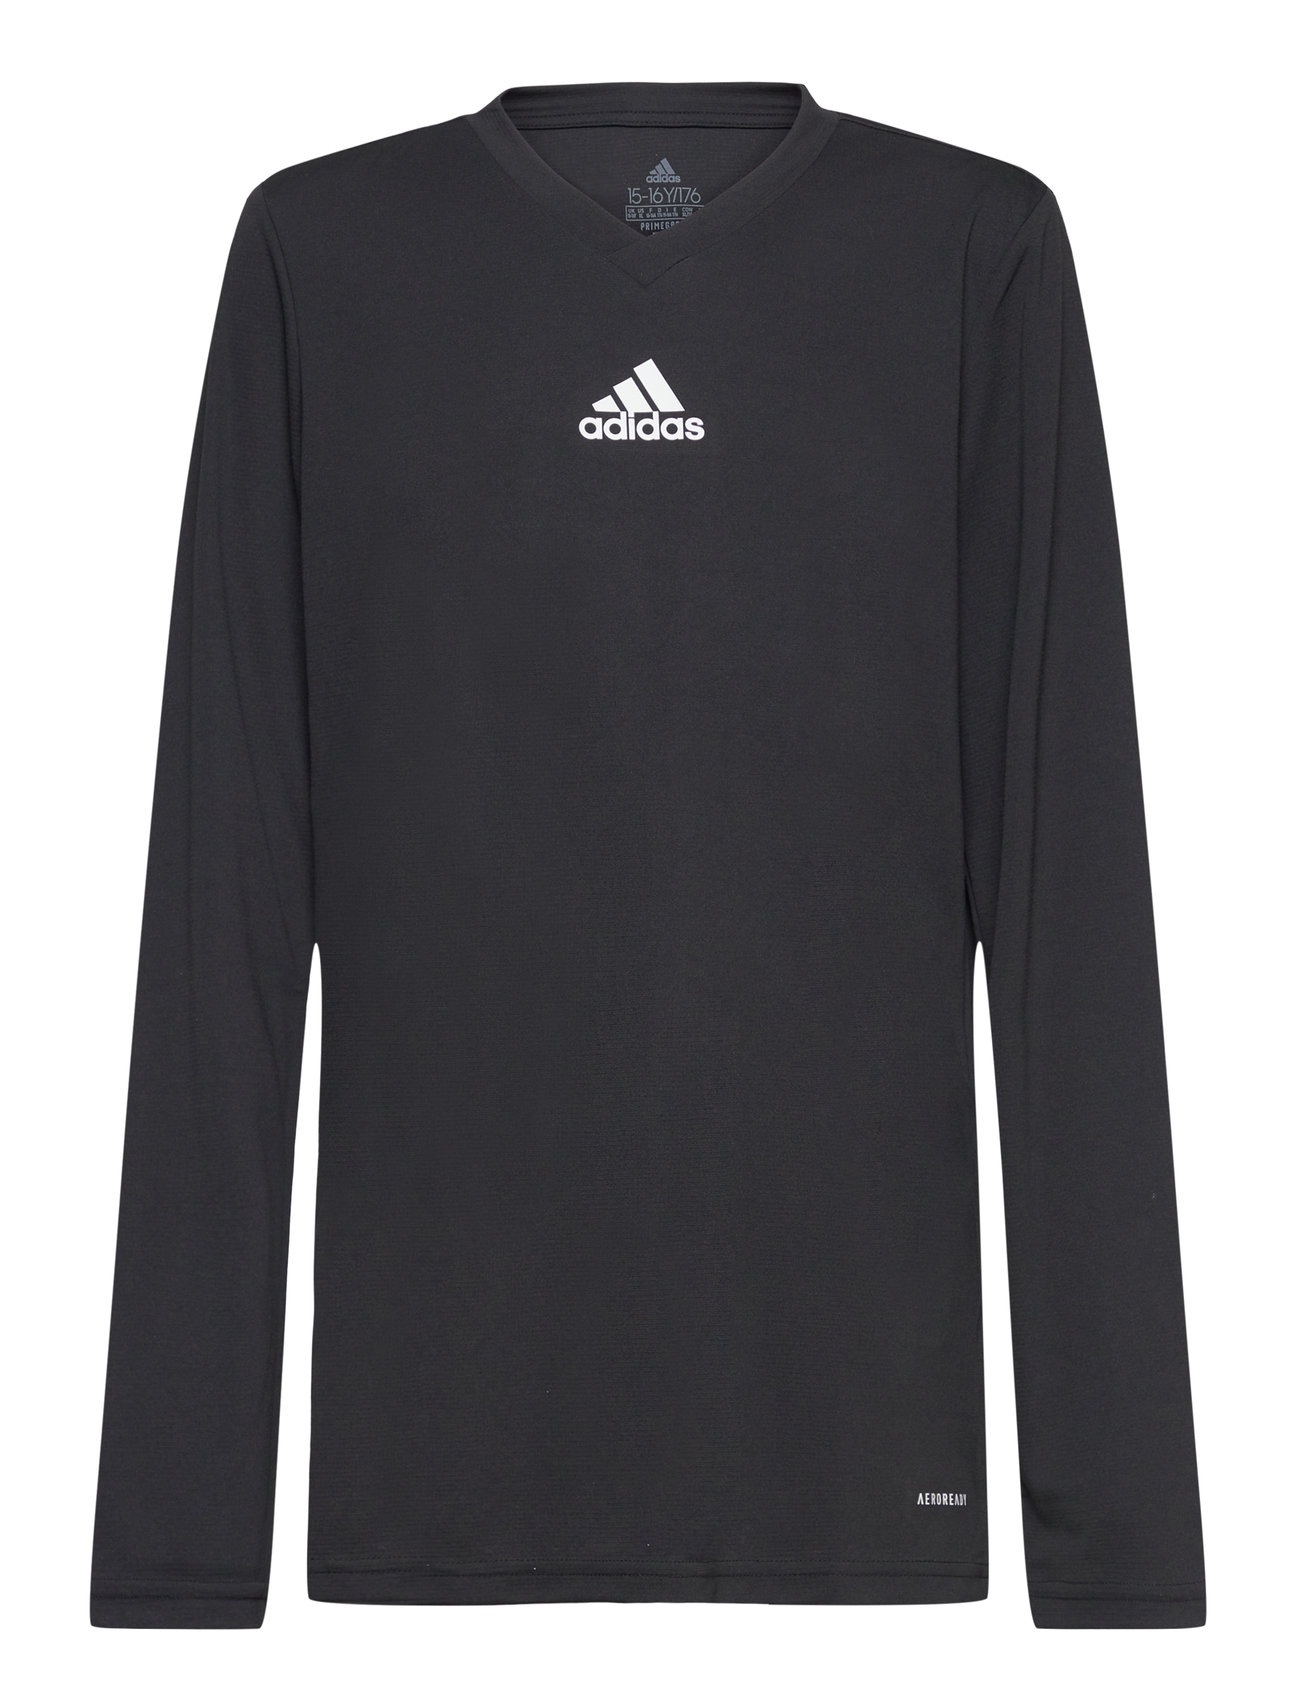 Team Base Tee Y Sport T-shirts Long-sleeved T-shirts Black Adidas Performance